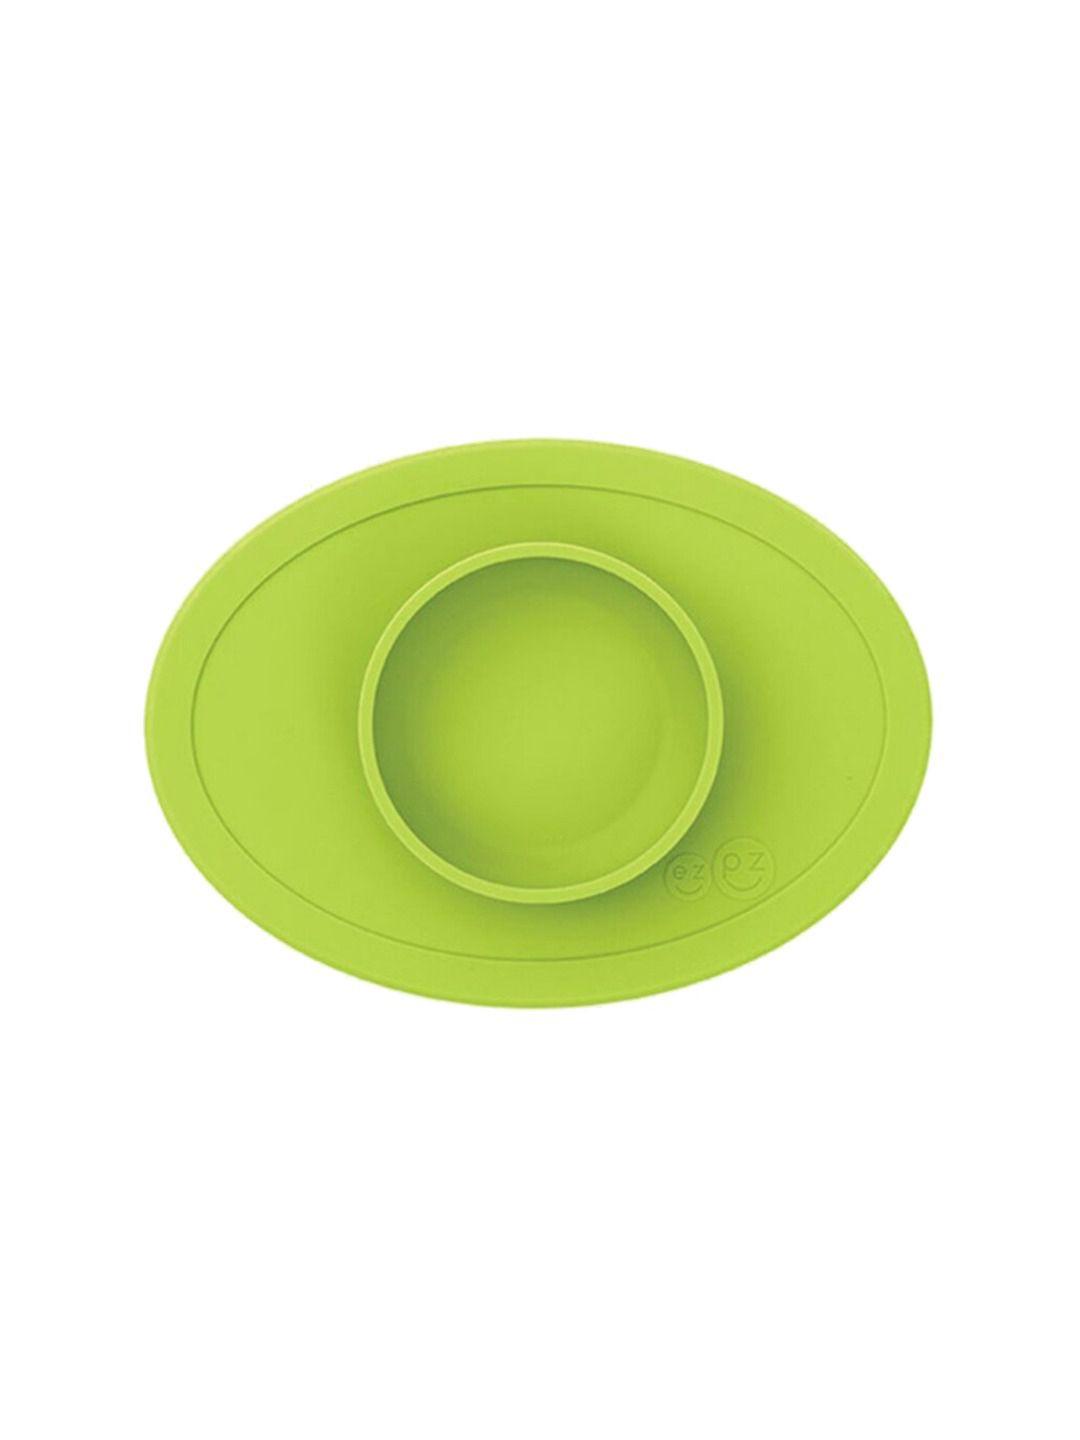 ezpz unisex kids lime green fda tiny bowl